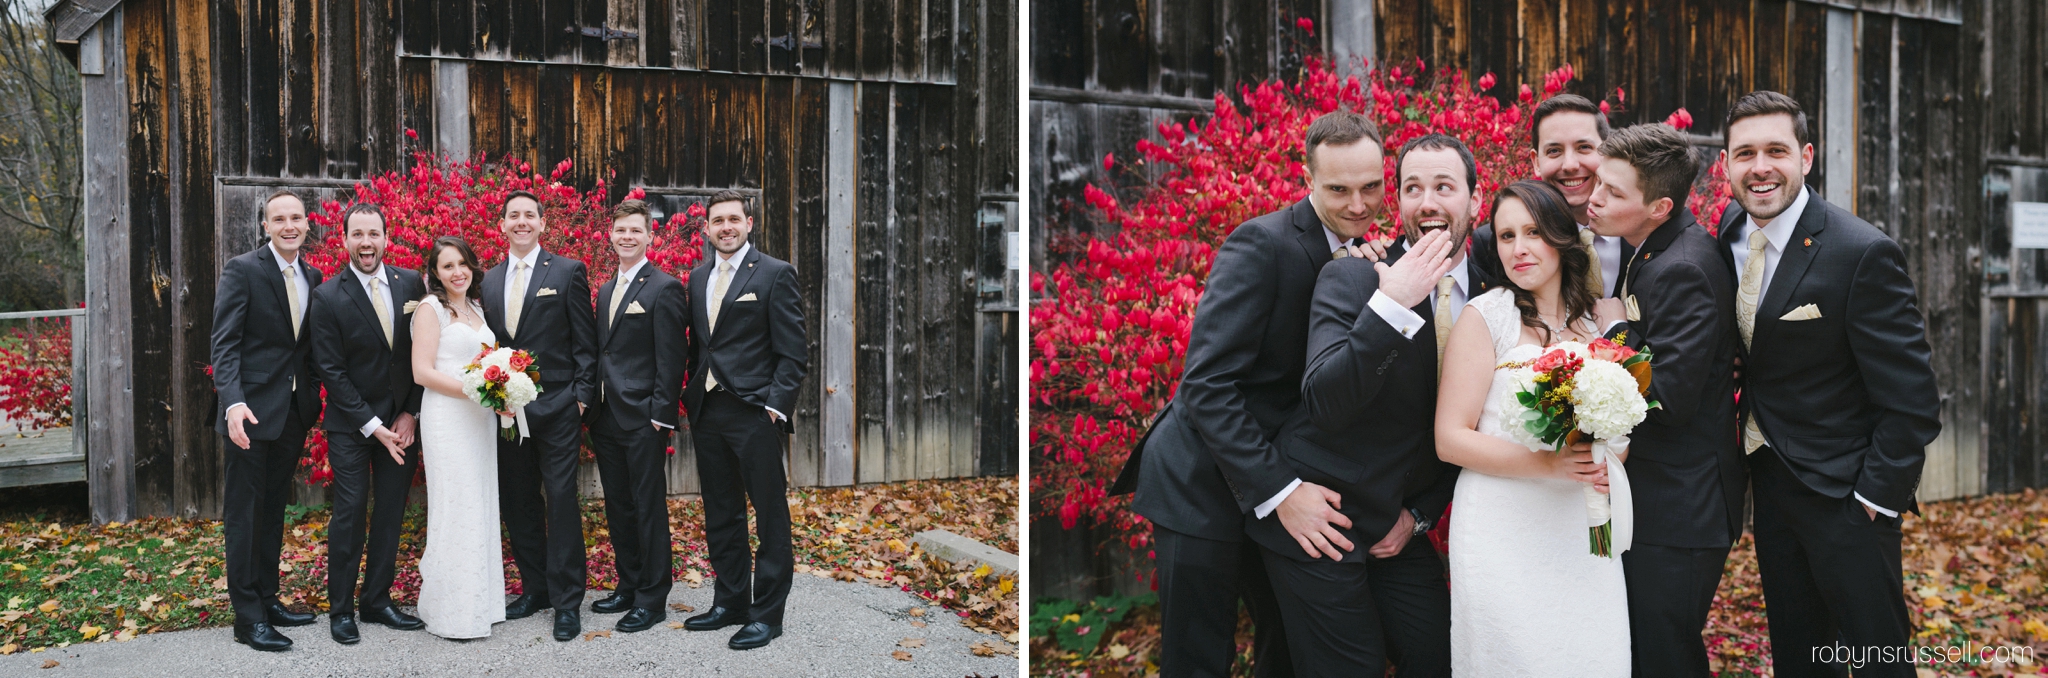 35-bride-and-groomsmen-being-silly.jpg